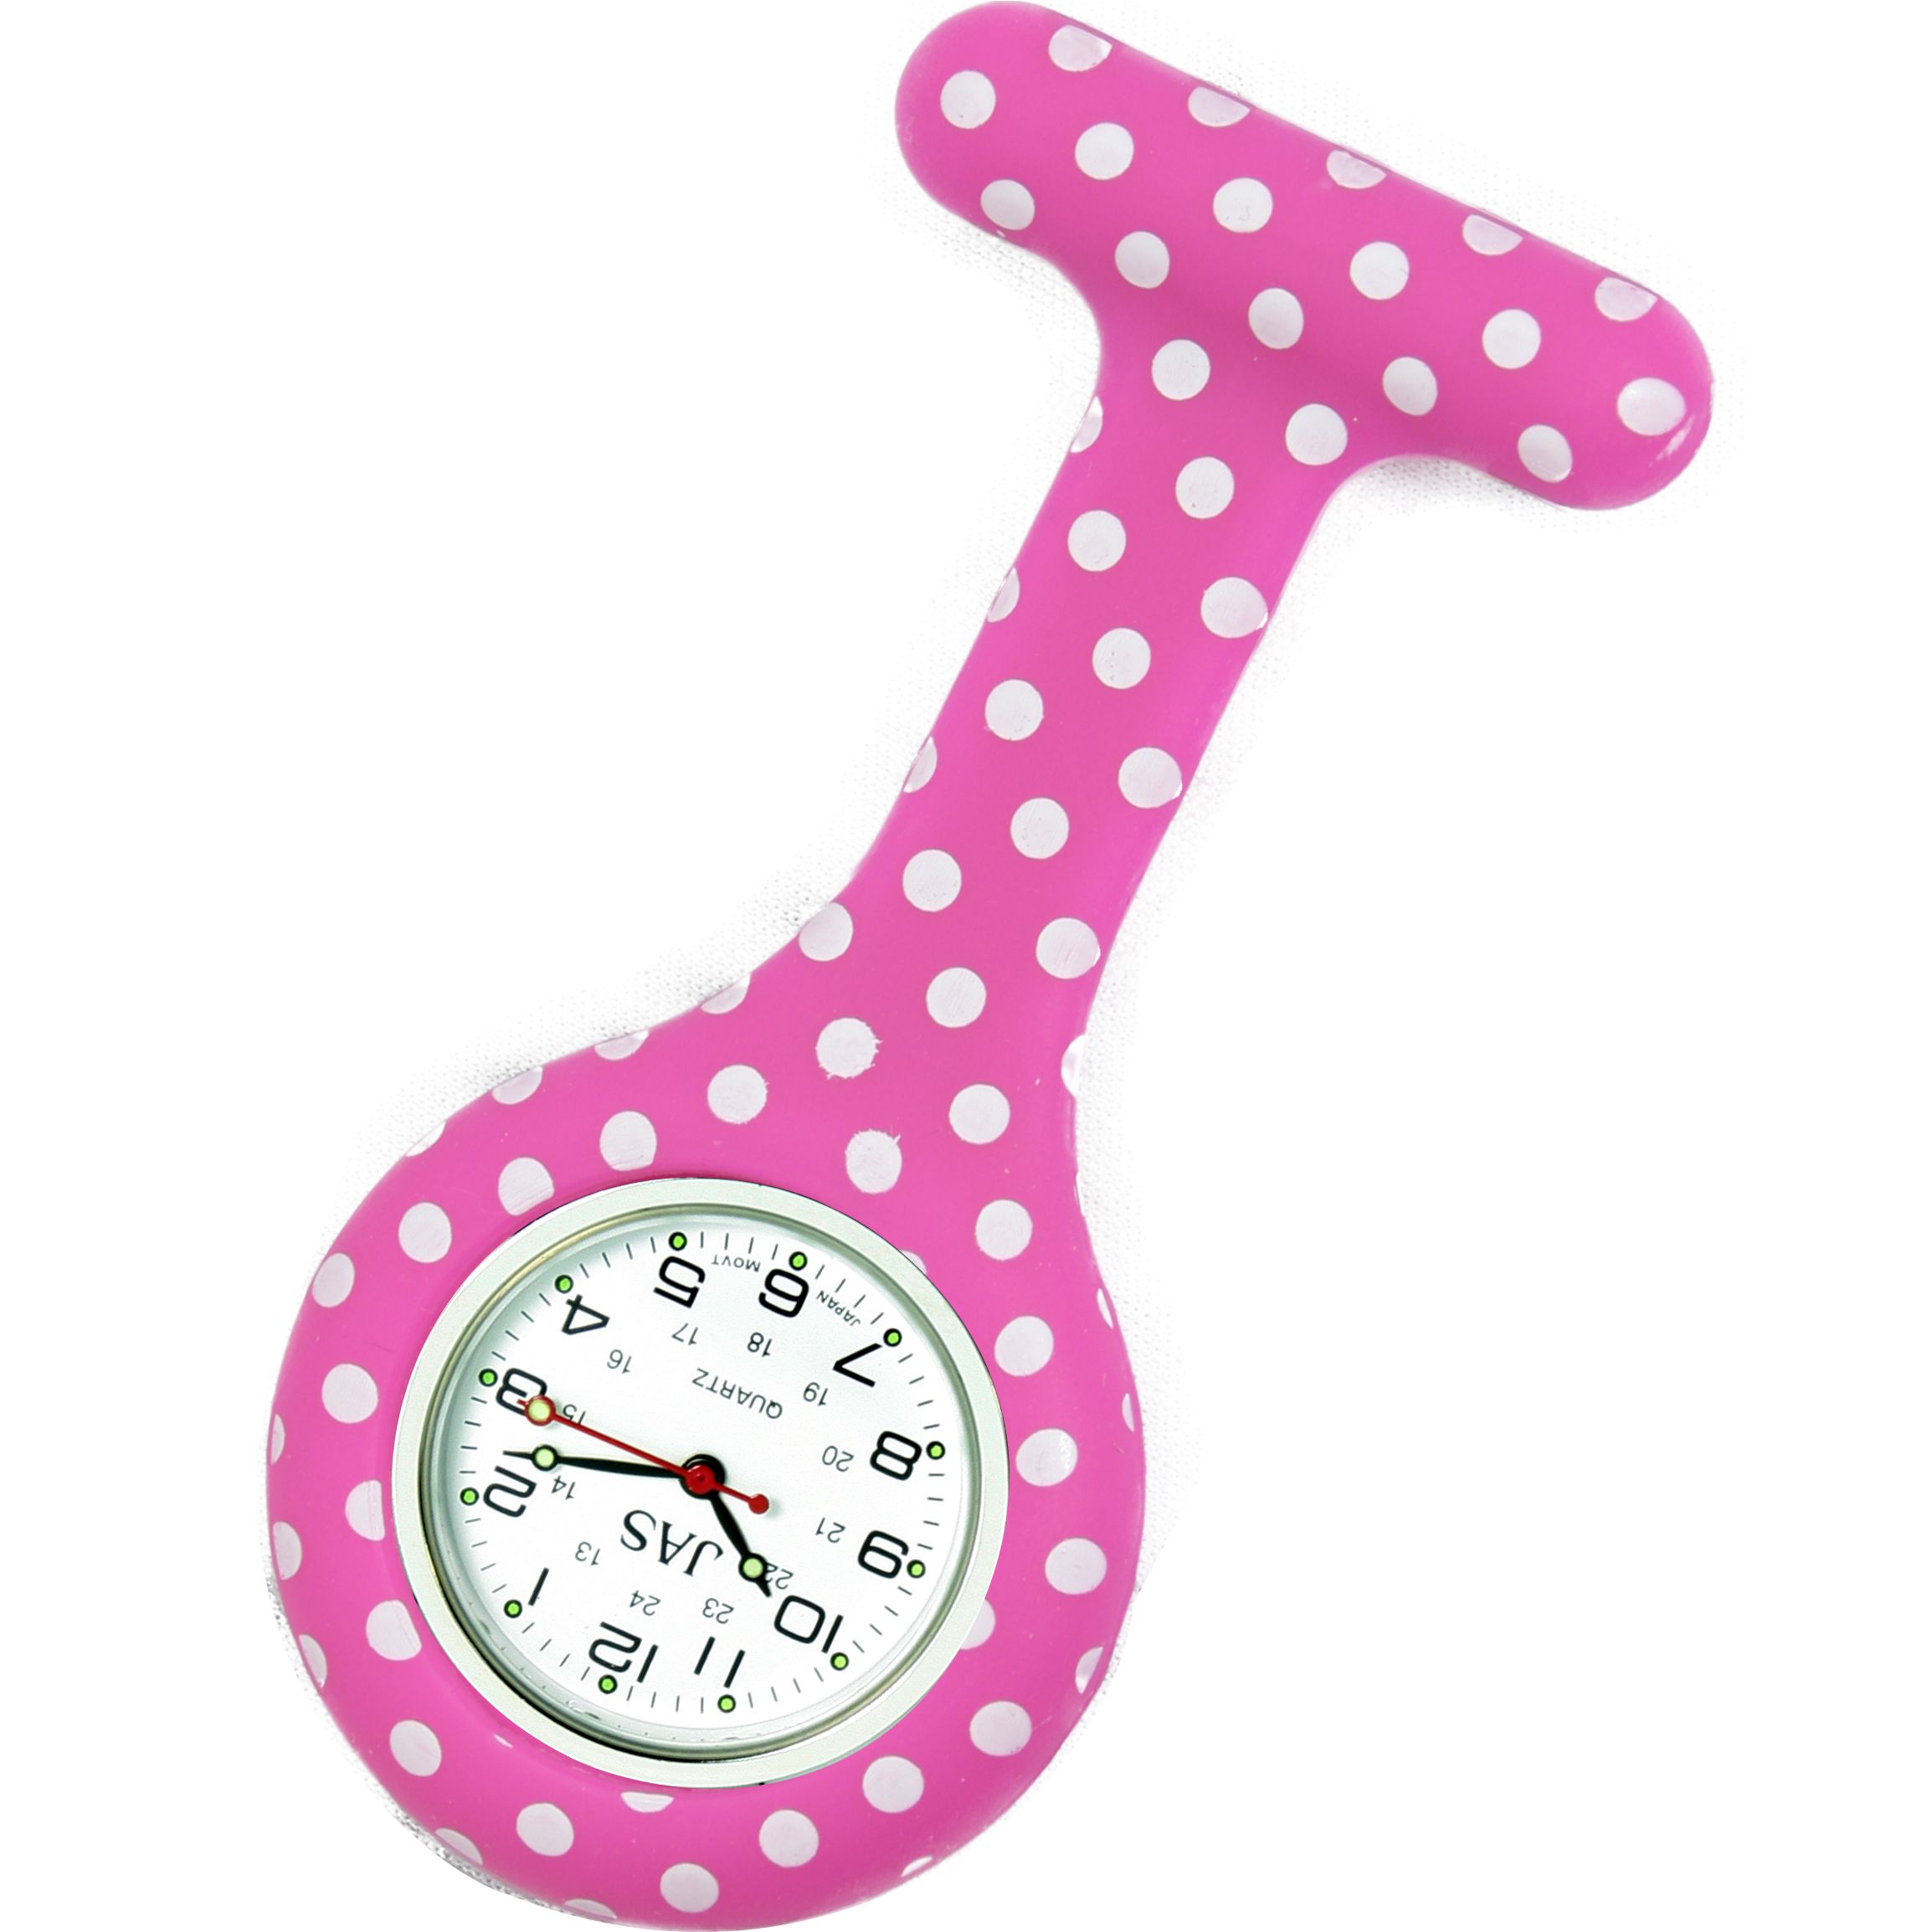 Nurse Pin Watch Silicone Polka-Dot Hot Pink